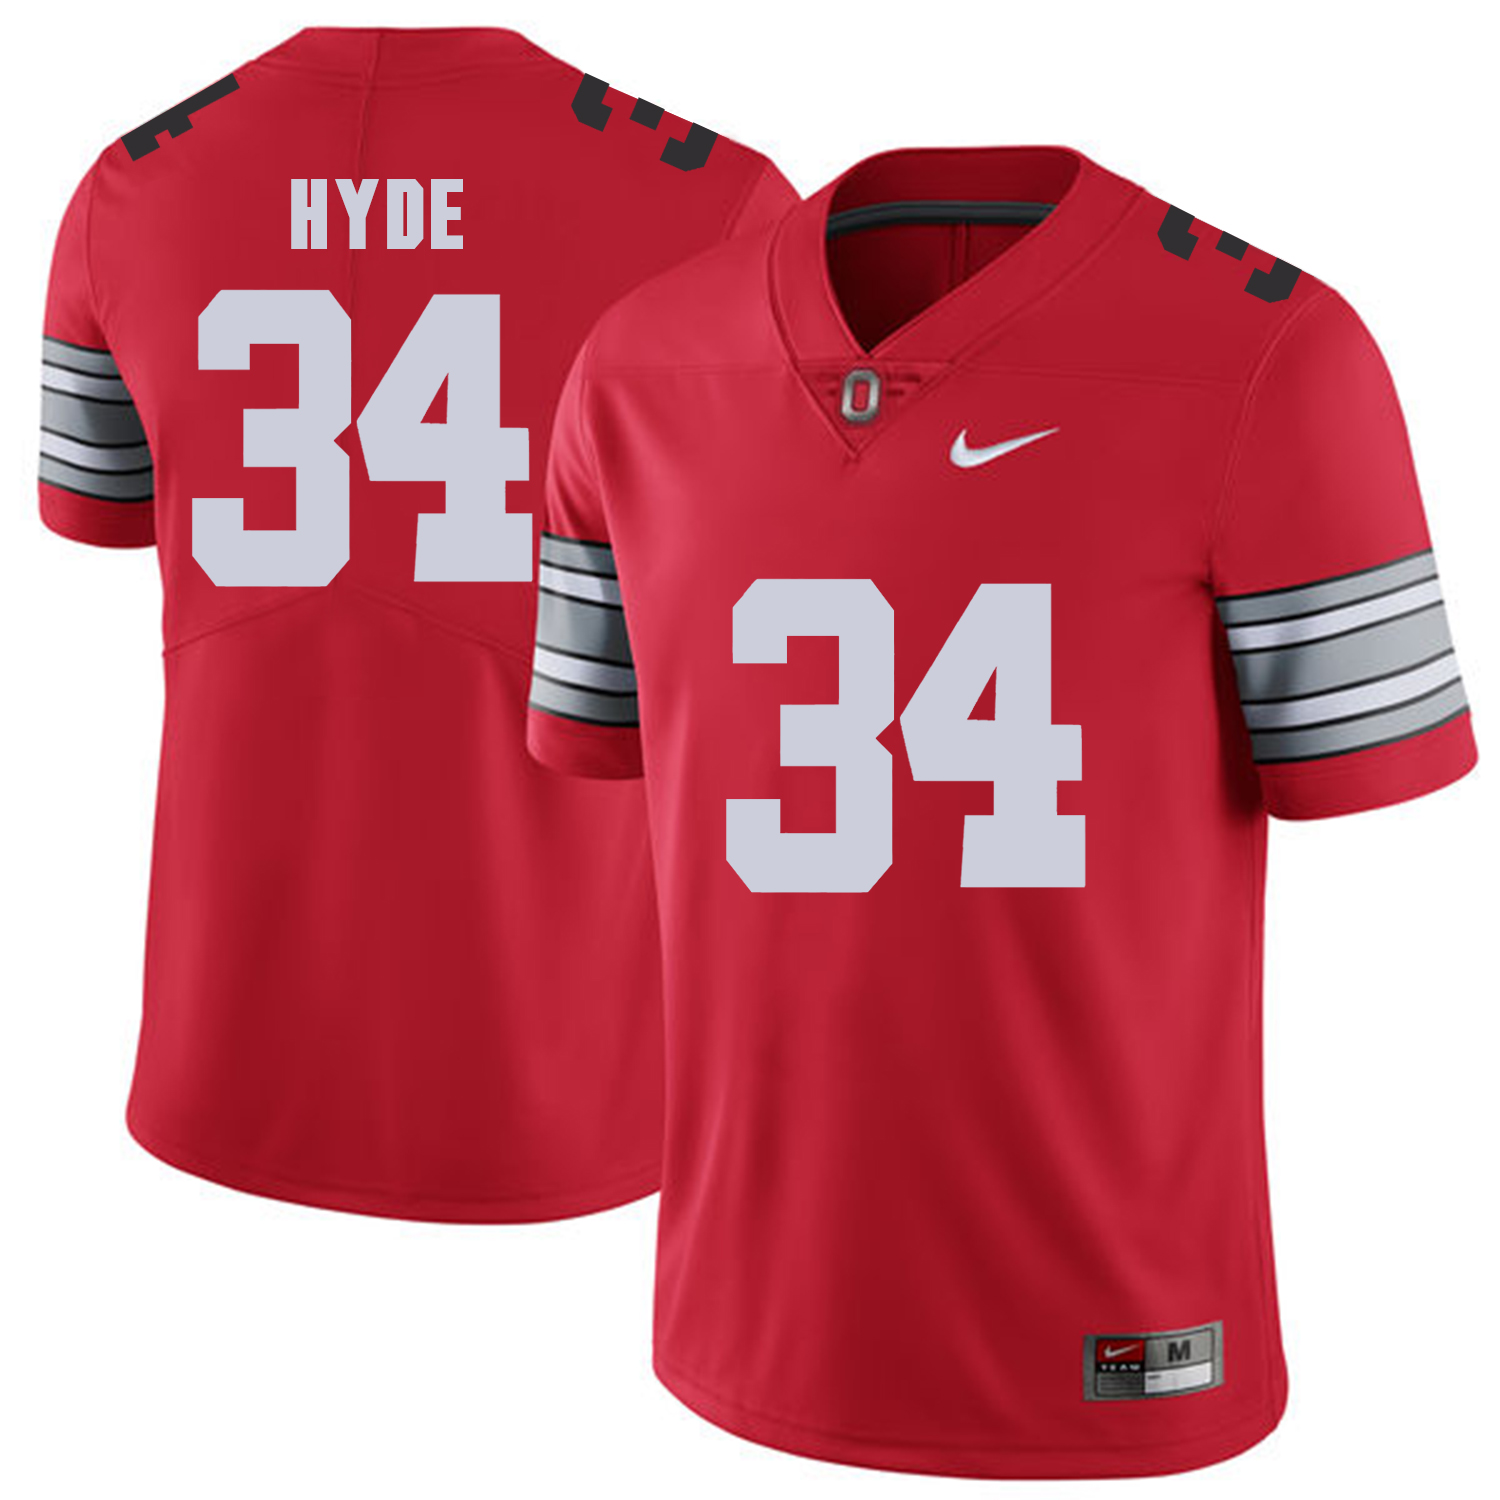 Men Ohio State 34 Hyde Red Customized NCAA Jerseys